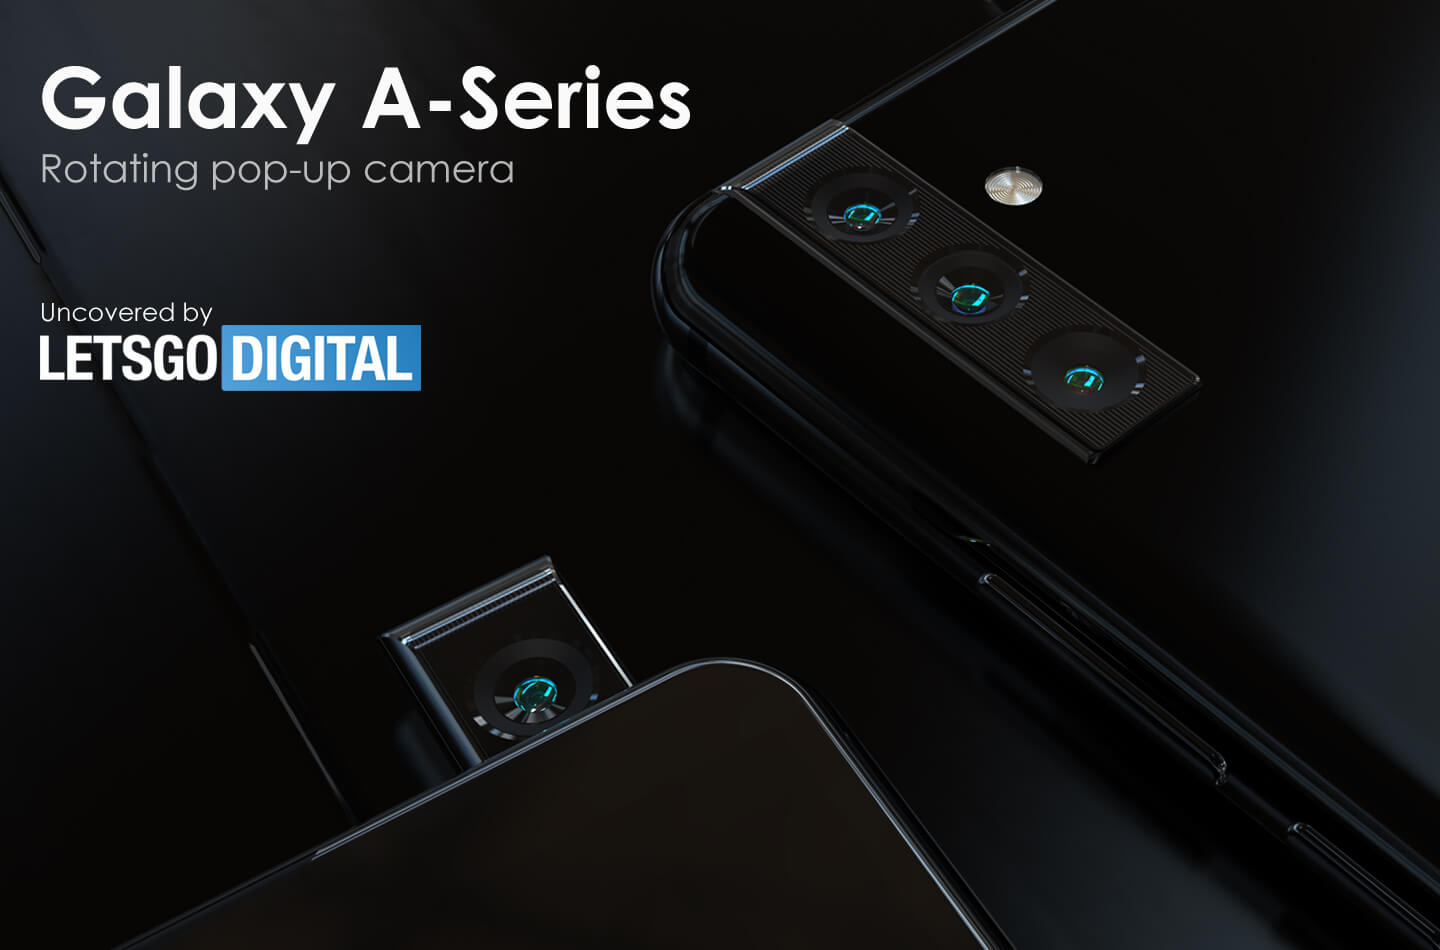 samsung-galaxy-a-series-smartphone-with-rotating-camera